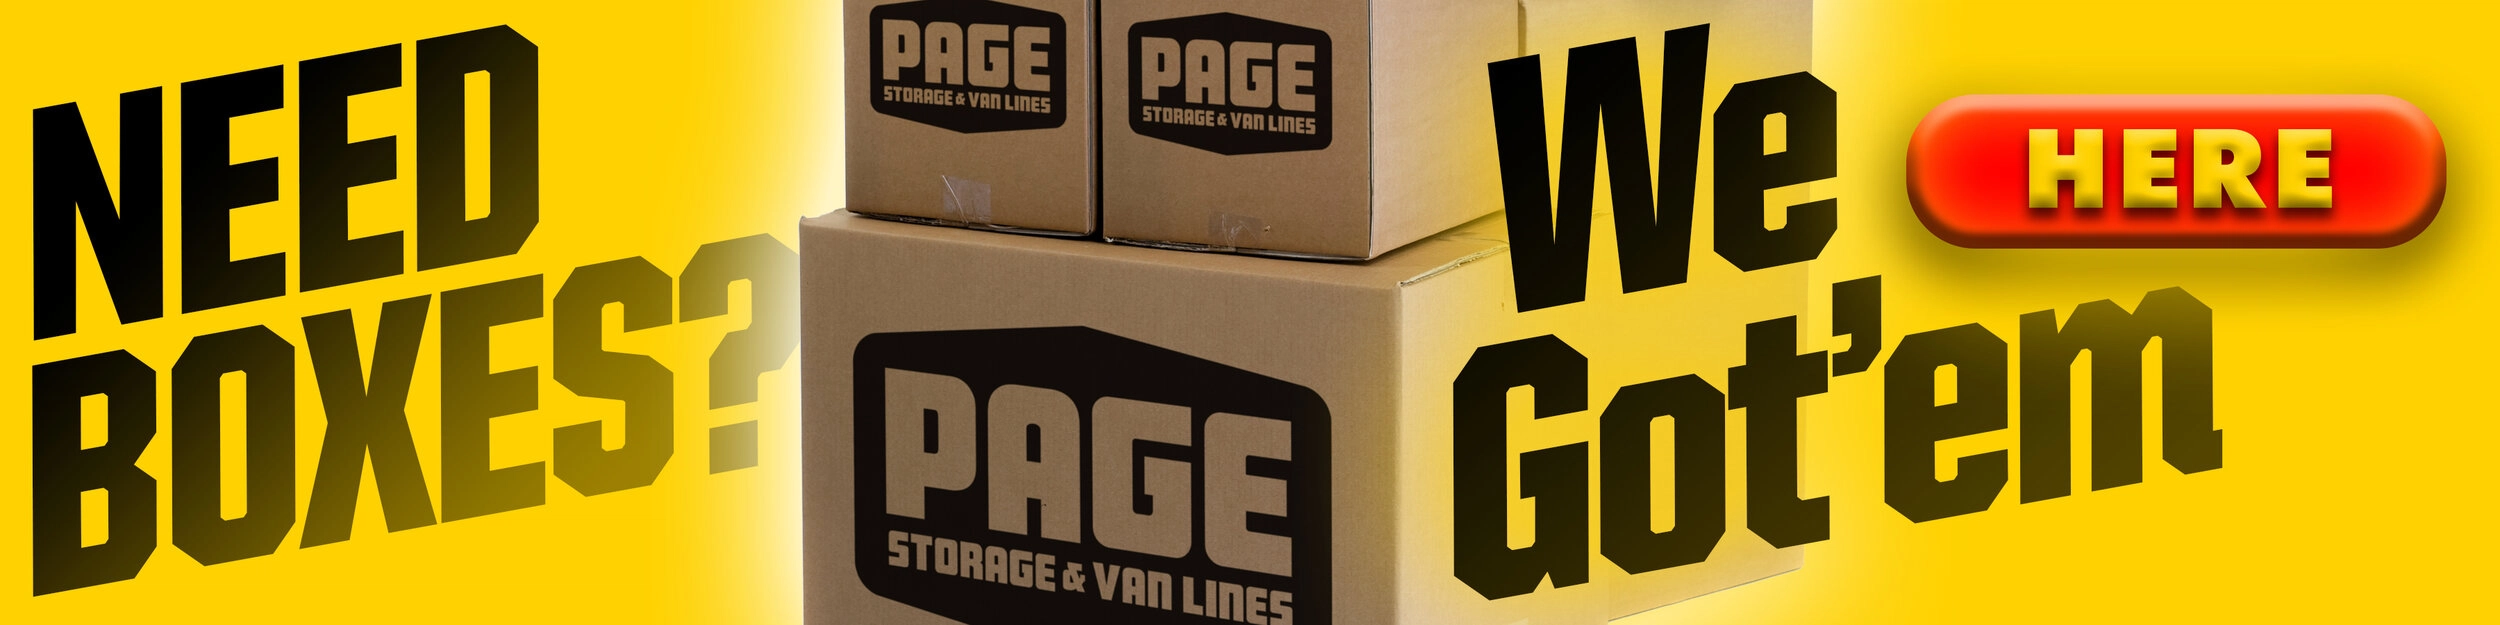 Page Storage and Van Lines Inc Logo